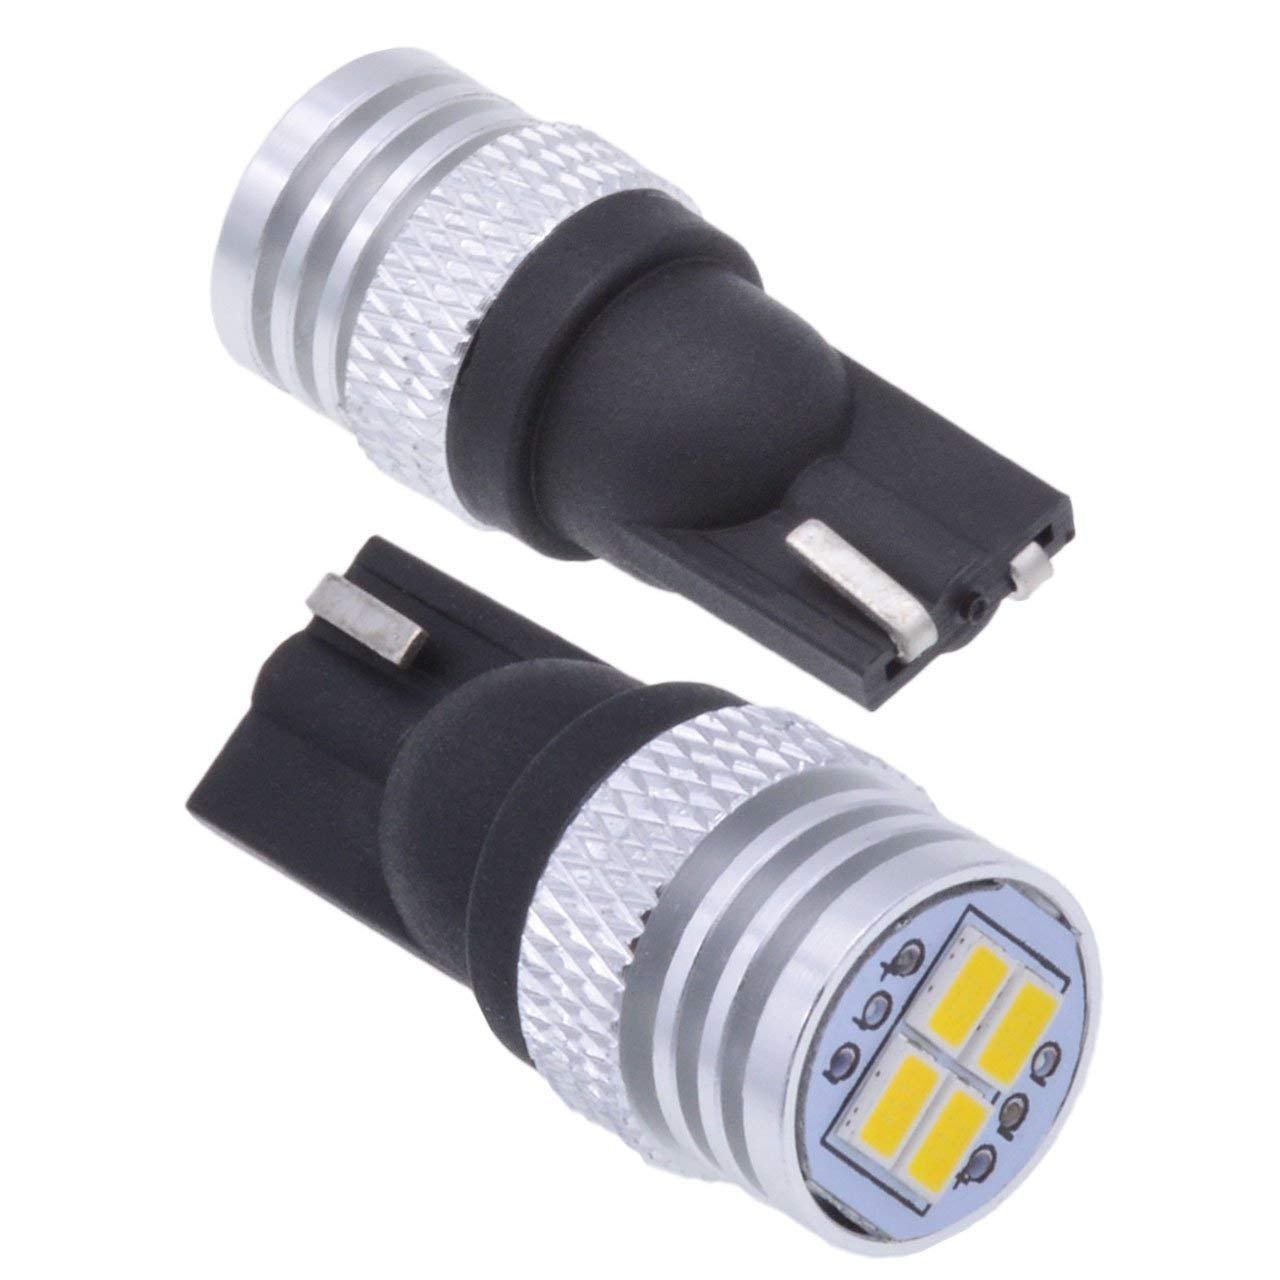 LED Bulbs (Brake, Interior and Signal) L-T10 T10 194 4 LED Canbus